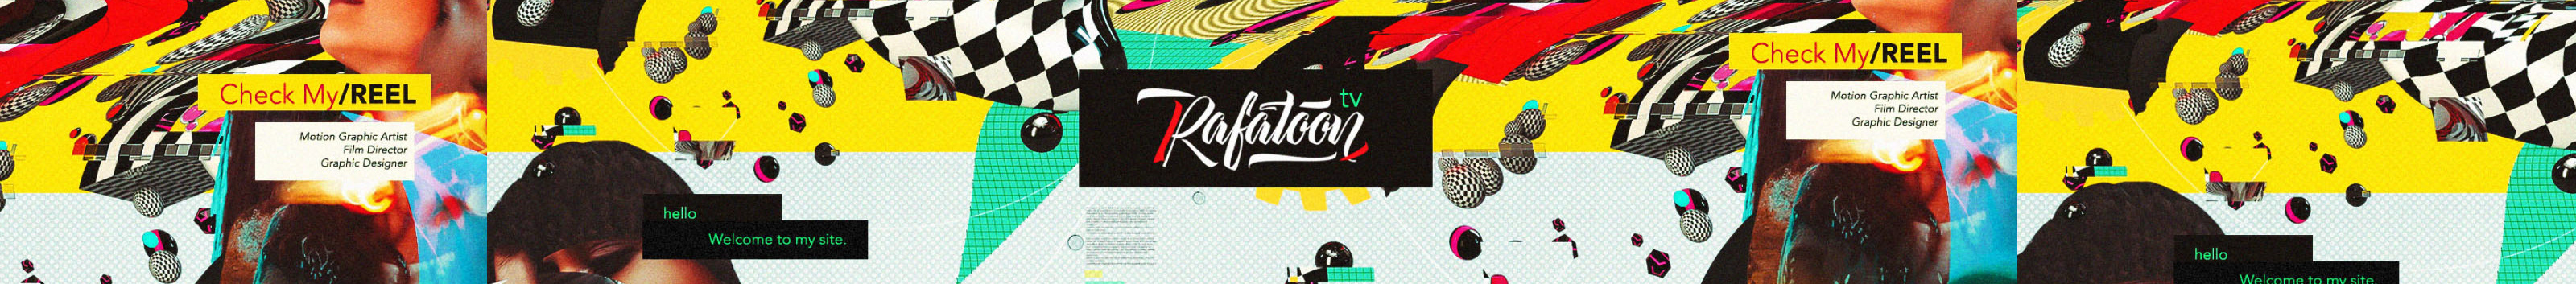 Rafatoon .'s profile banner